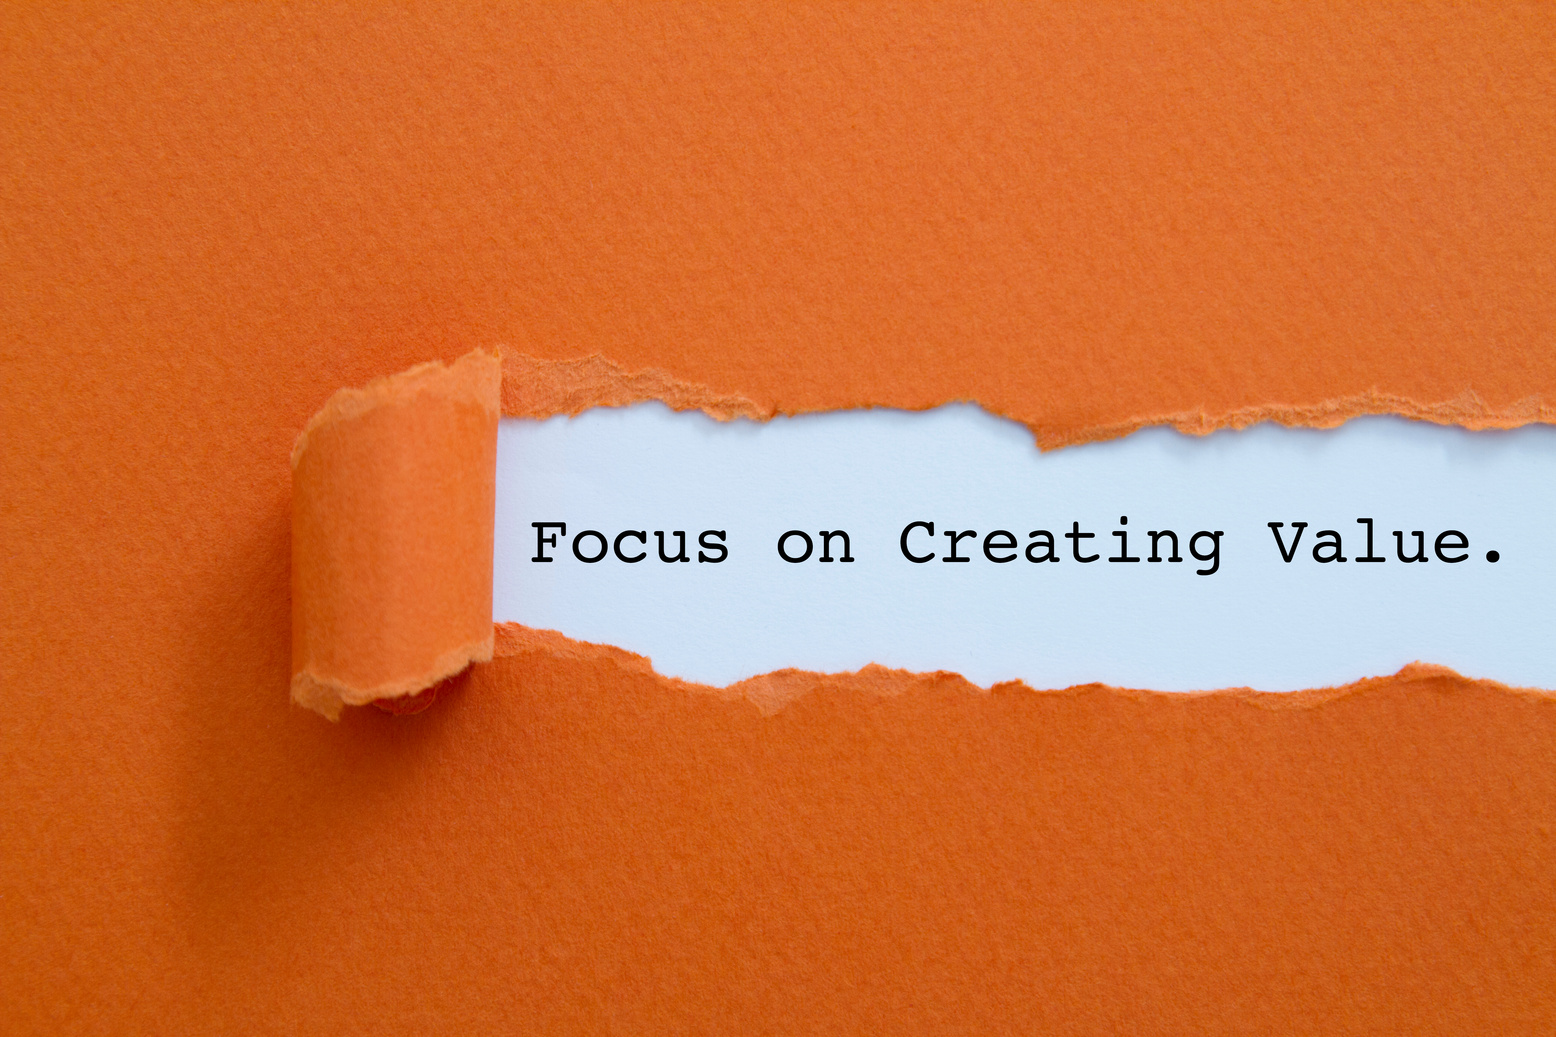 Focus on Creating Value